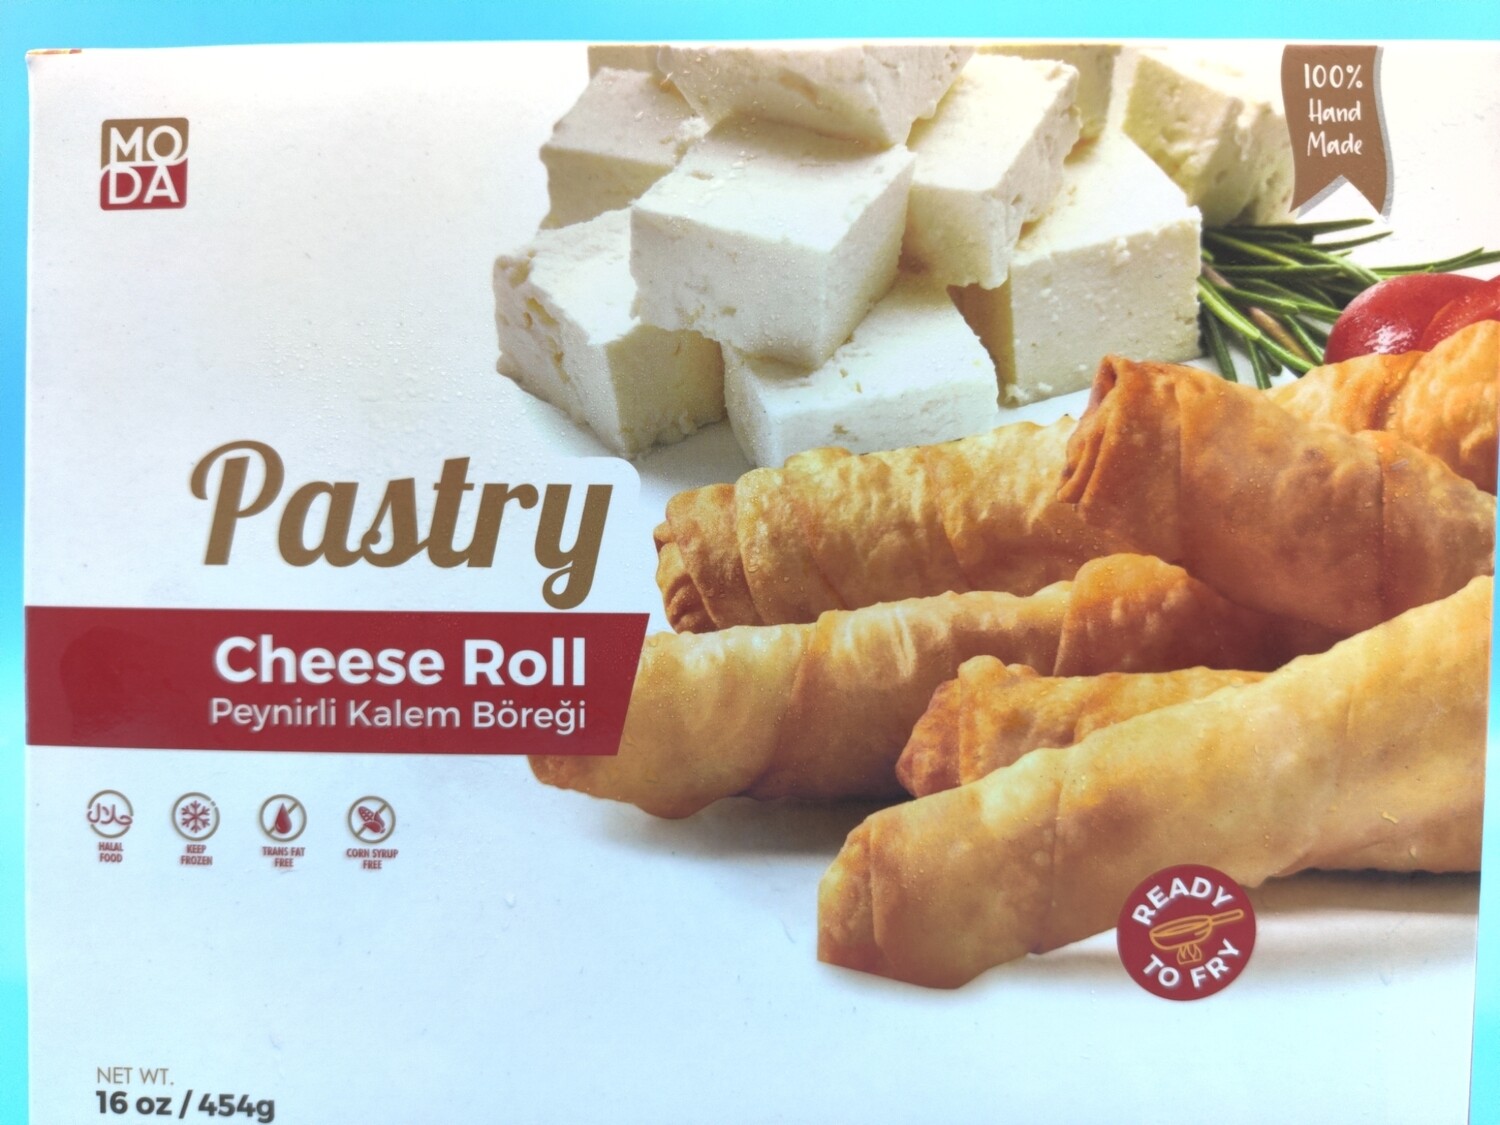 MODA Peynirli Kalem Boregi - Cheese Pastry Roll 1lb